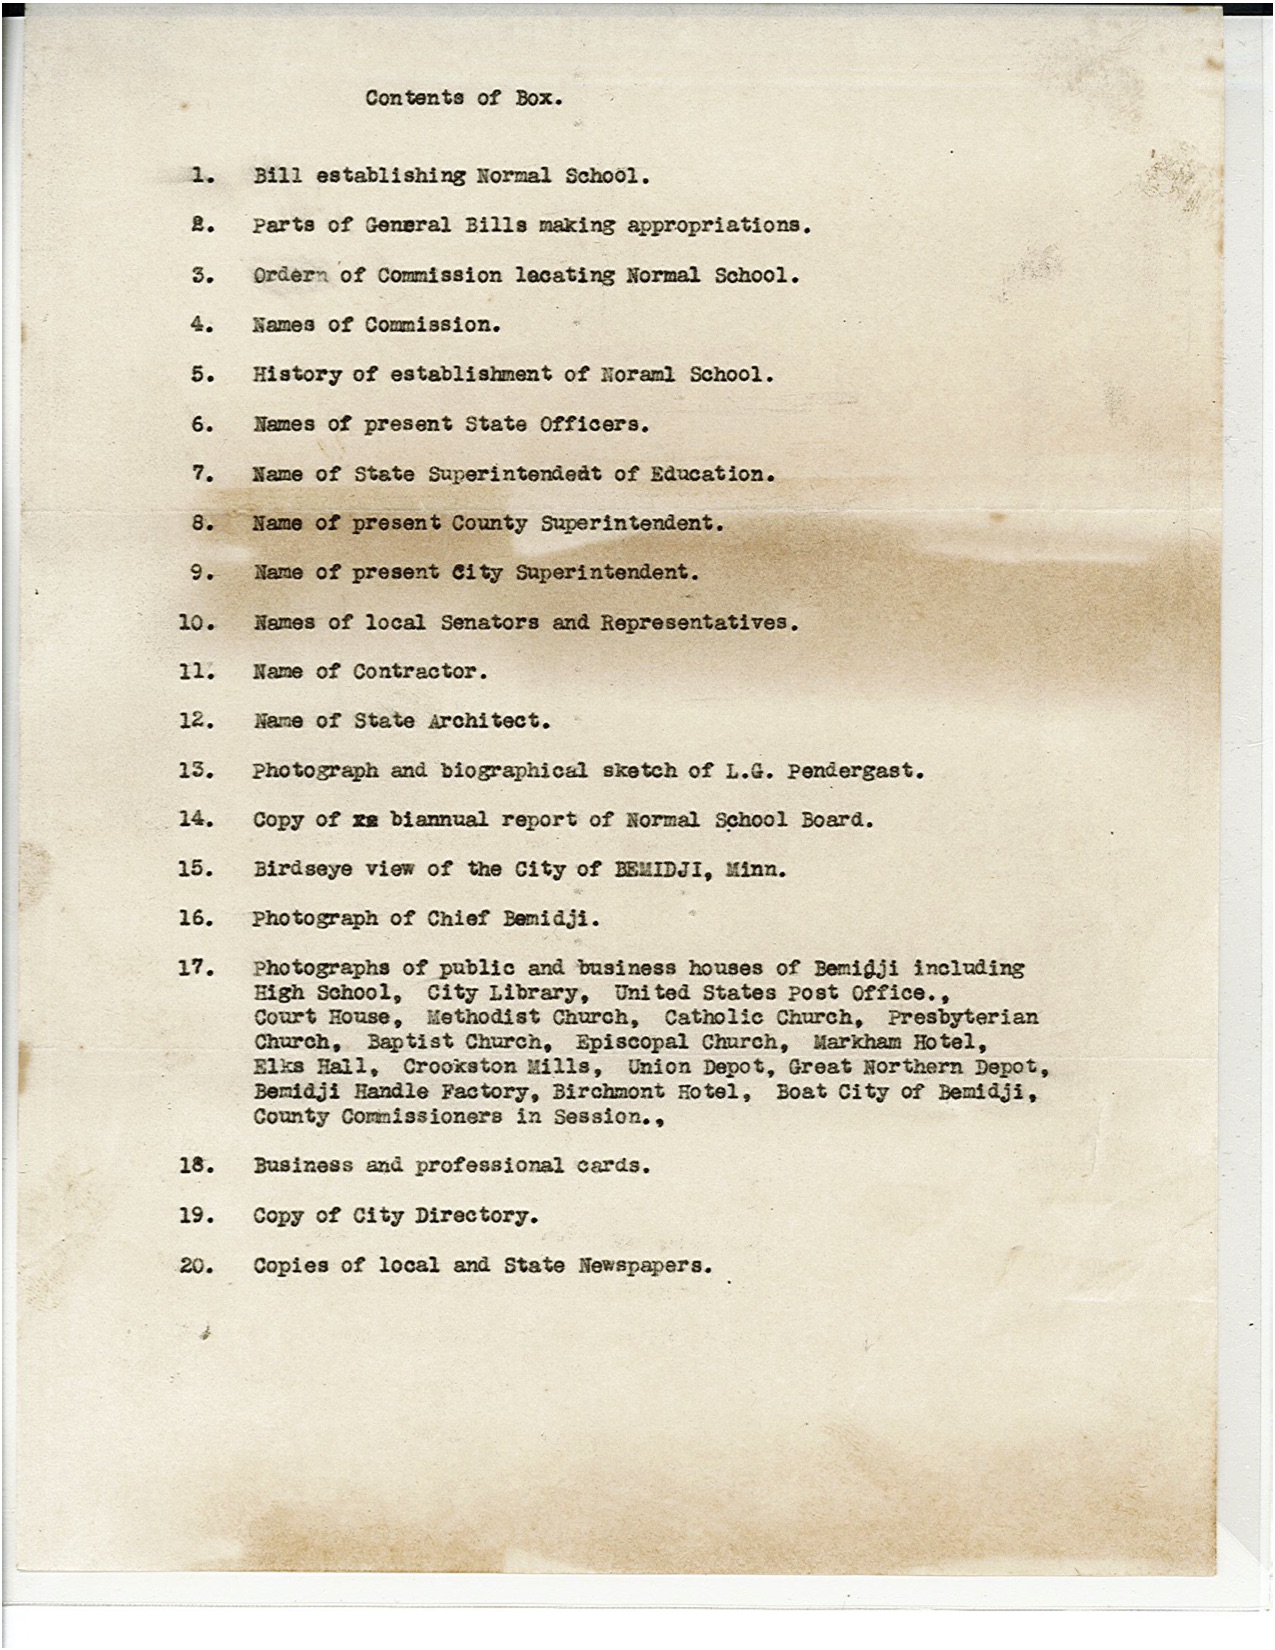 1919 Time Capsule Contents list